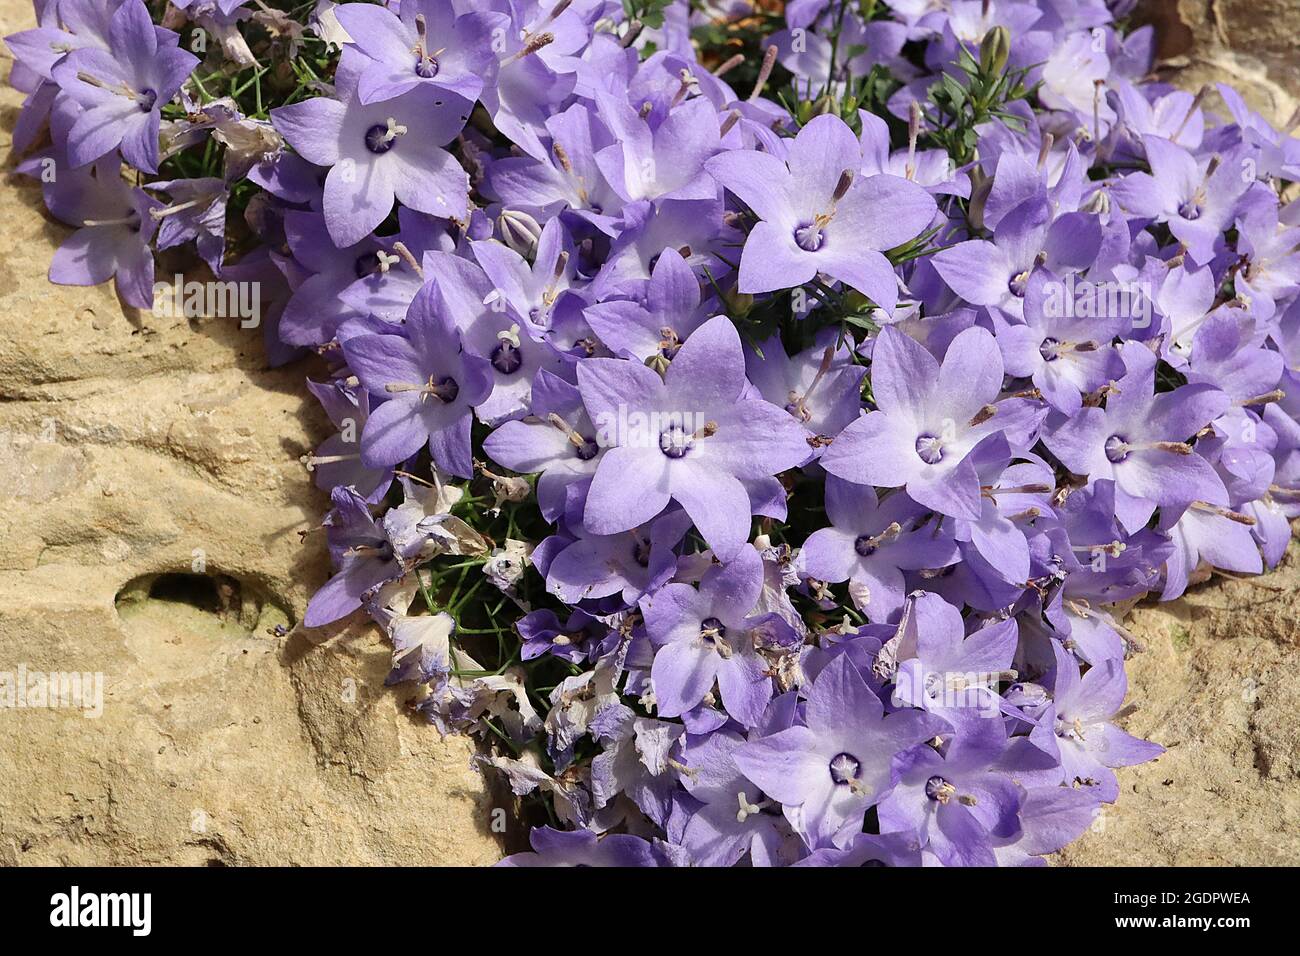 Campanula fragilis var hirsuta haarig-blättrige brüchige Glockenblume – Haufen lilafarbener, offener Blüten mit langgestrecktem Stil, Juli, England, Großbritannien Stockfoto